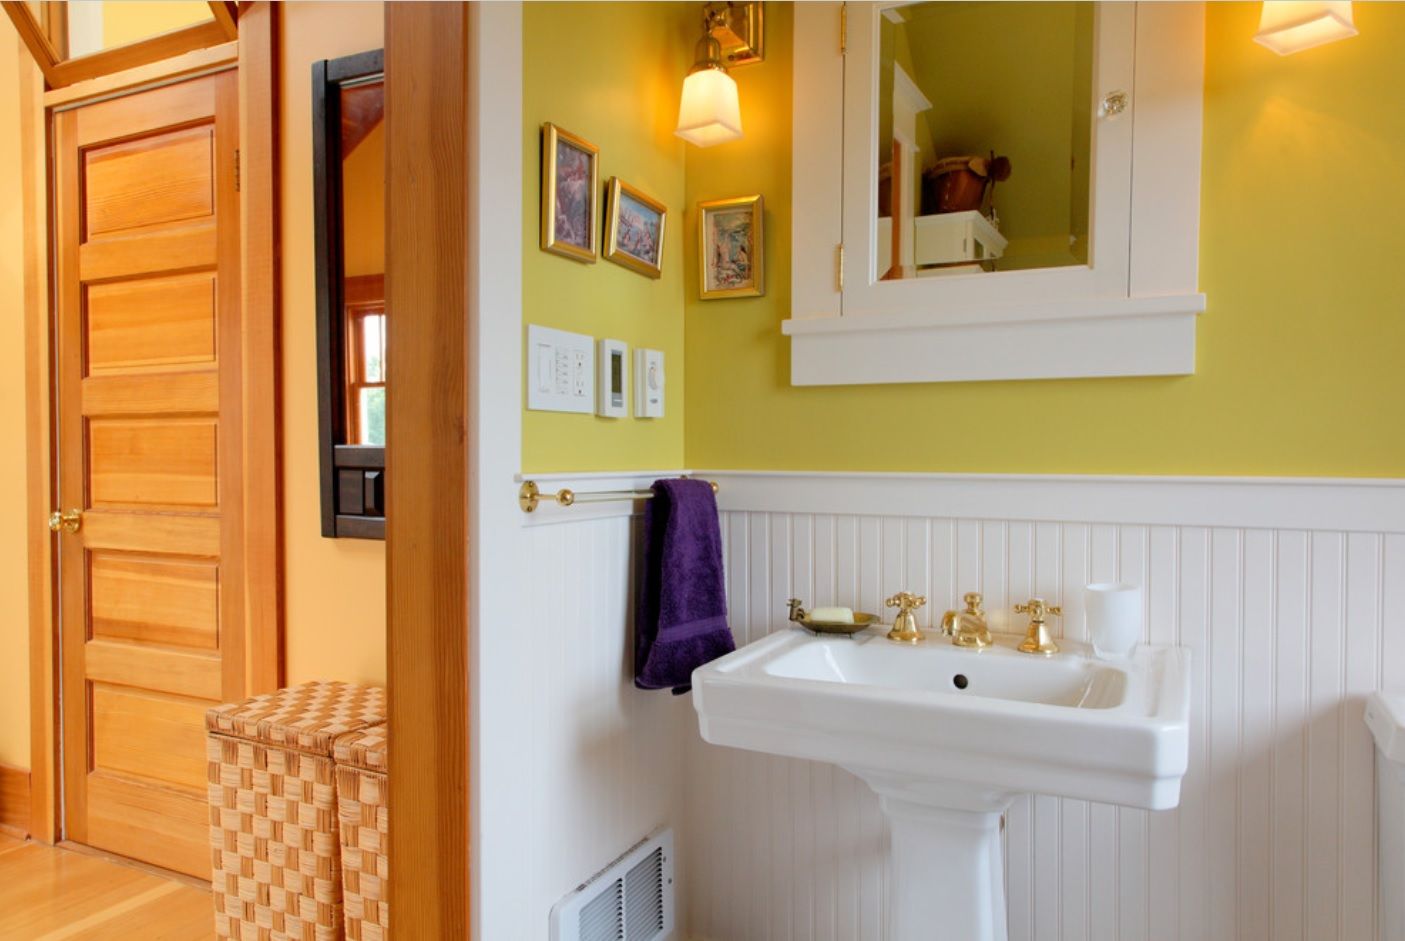 Bathroom With Wainscoting Design Ideas Small Design Ideas